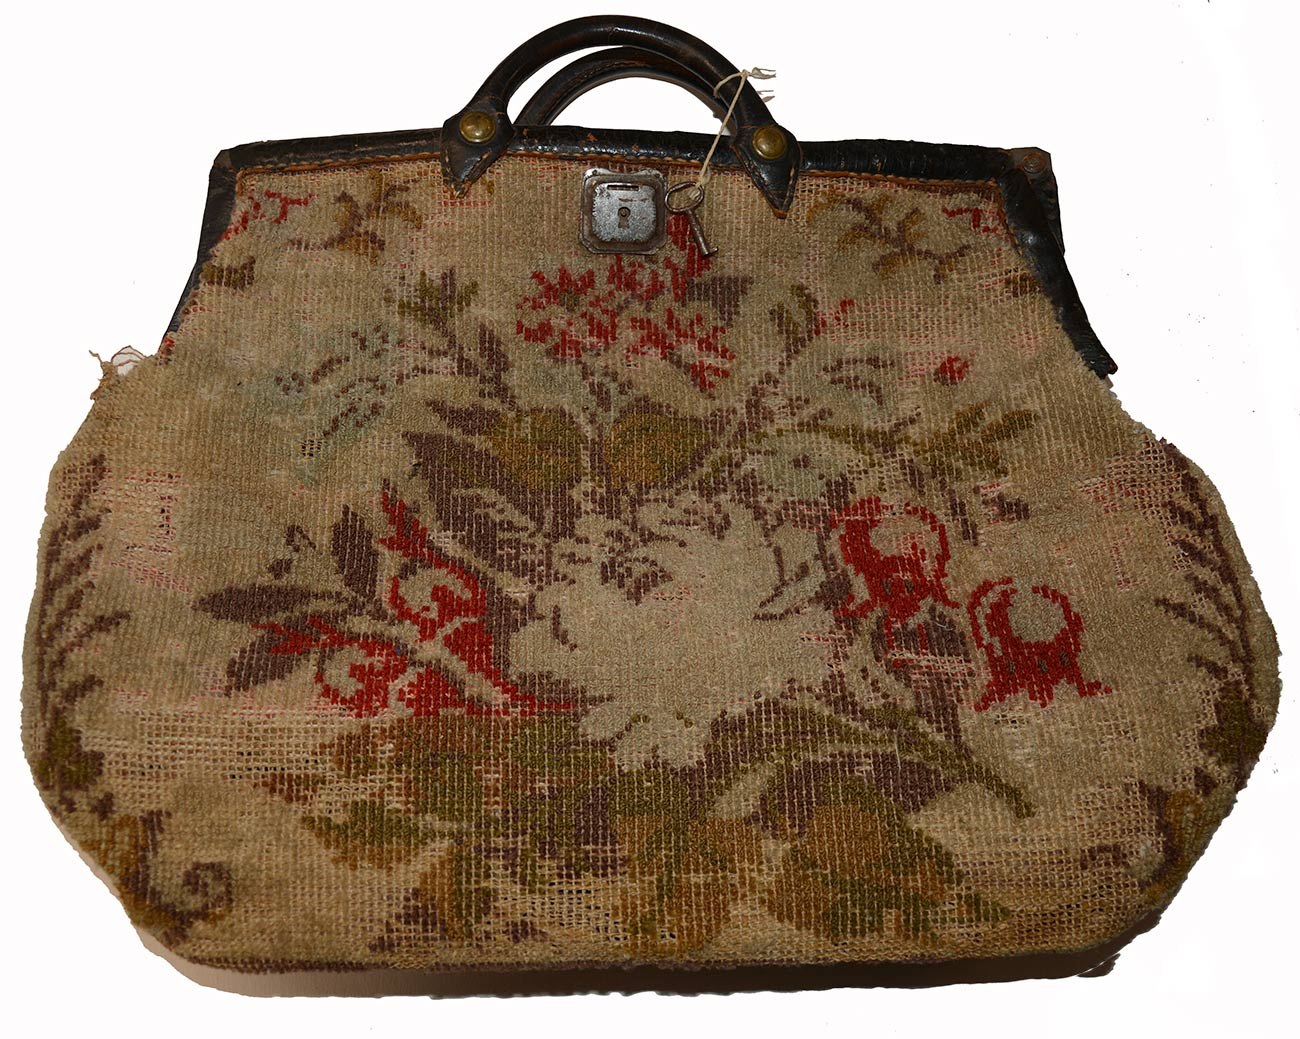 Mary Poppins Practically Perfect Carpet Bag Replica - ID: jundisneyana20334  | Van Eaton Galleries